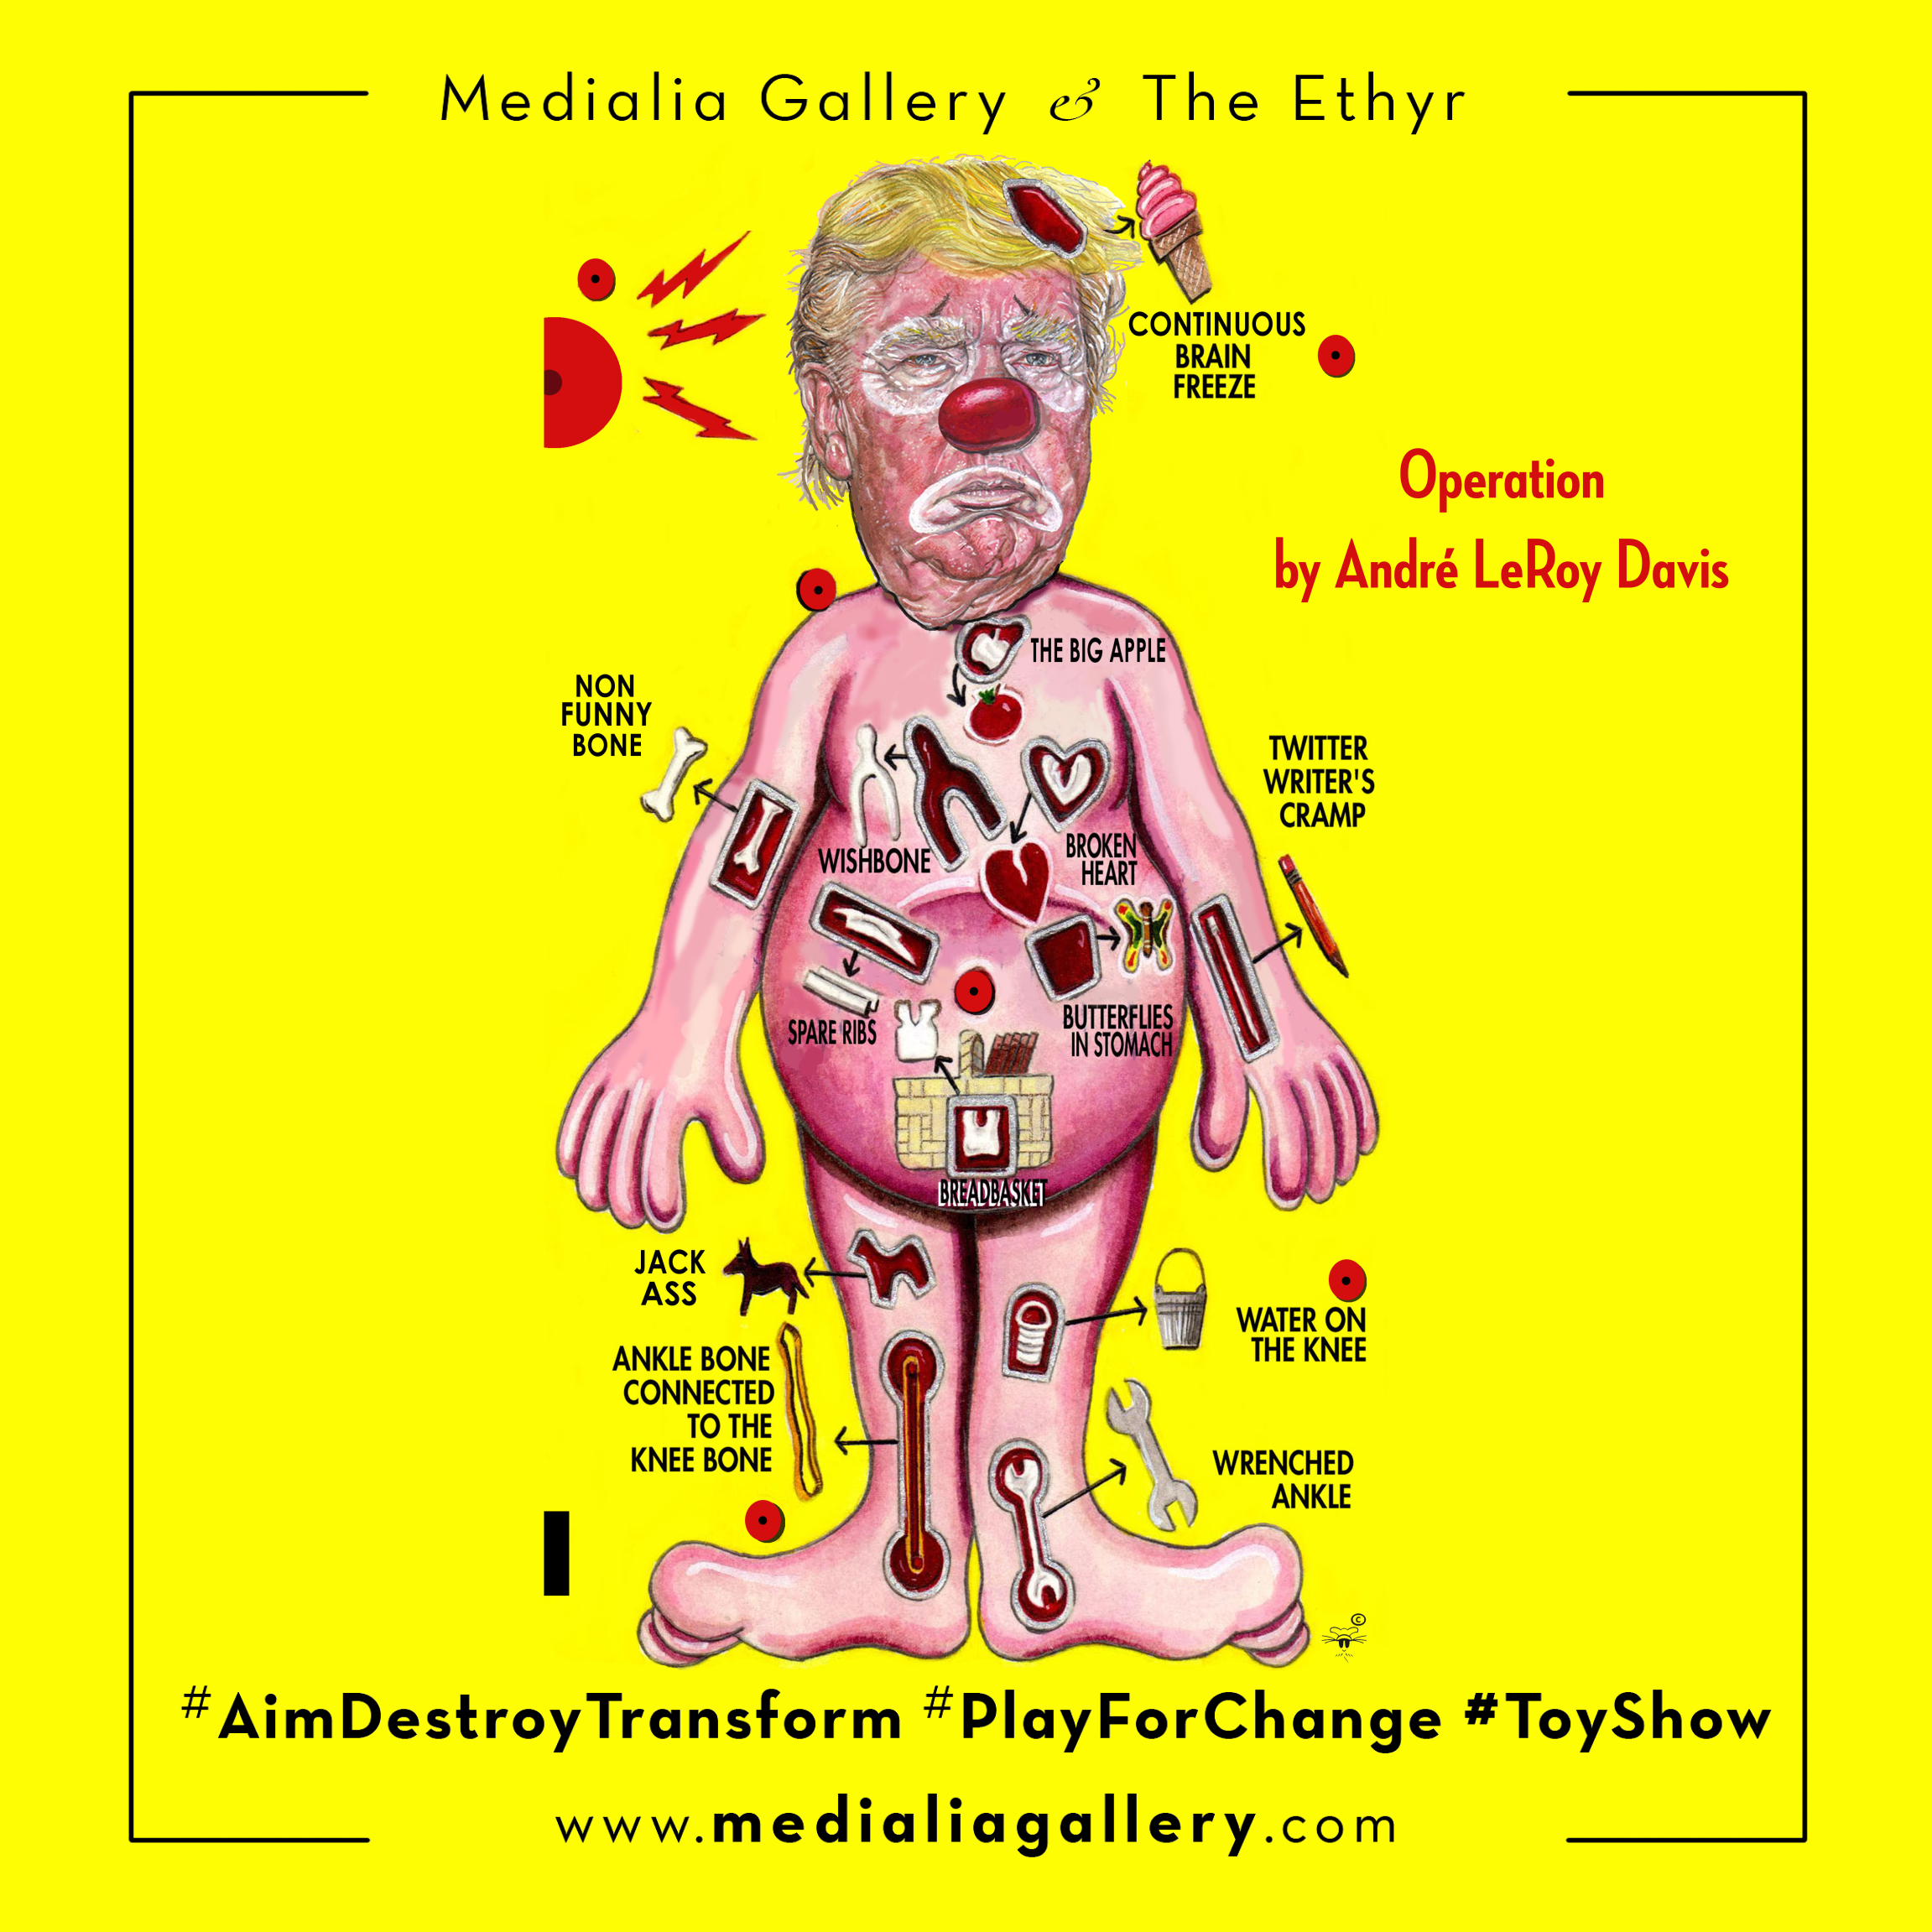 MedialiaGallery_The_Ethyr_AimDestroyTransform_Toy_Show_Operation_Trump_Andre_Leroy_Davis_November_2017.png